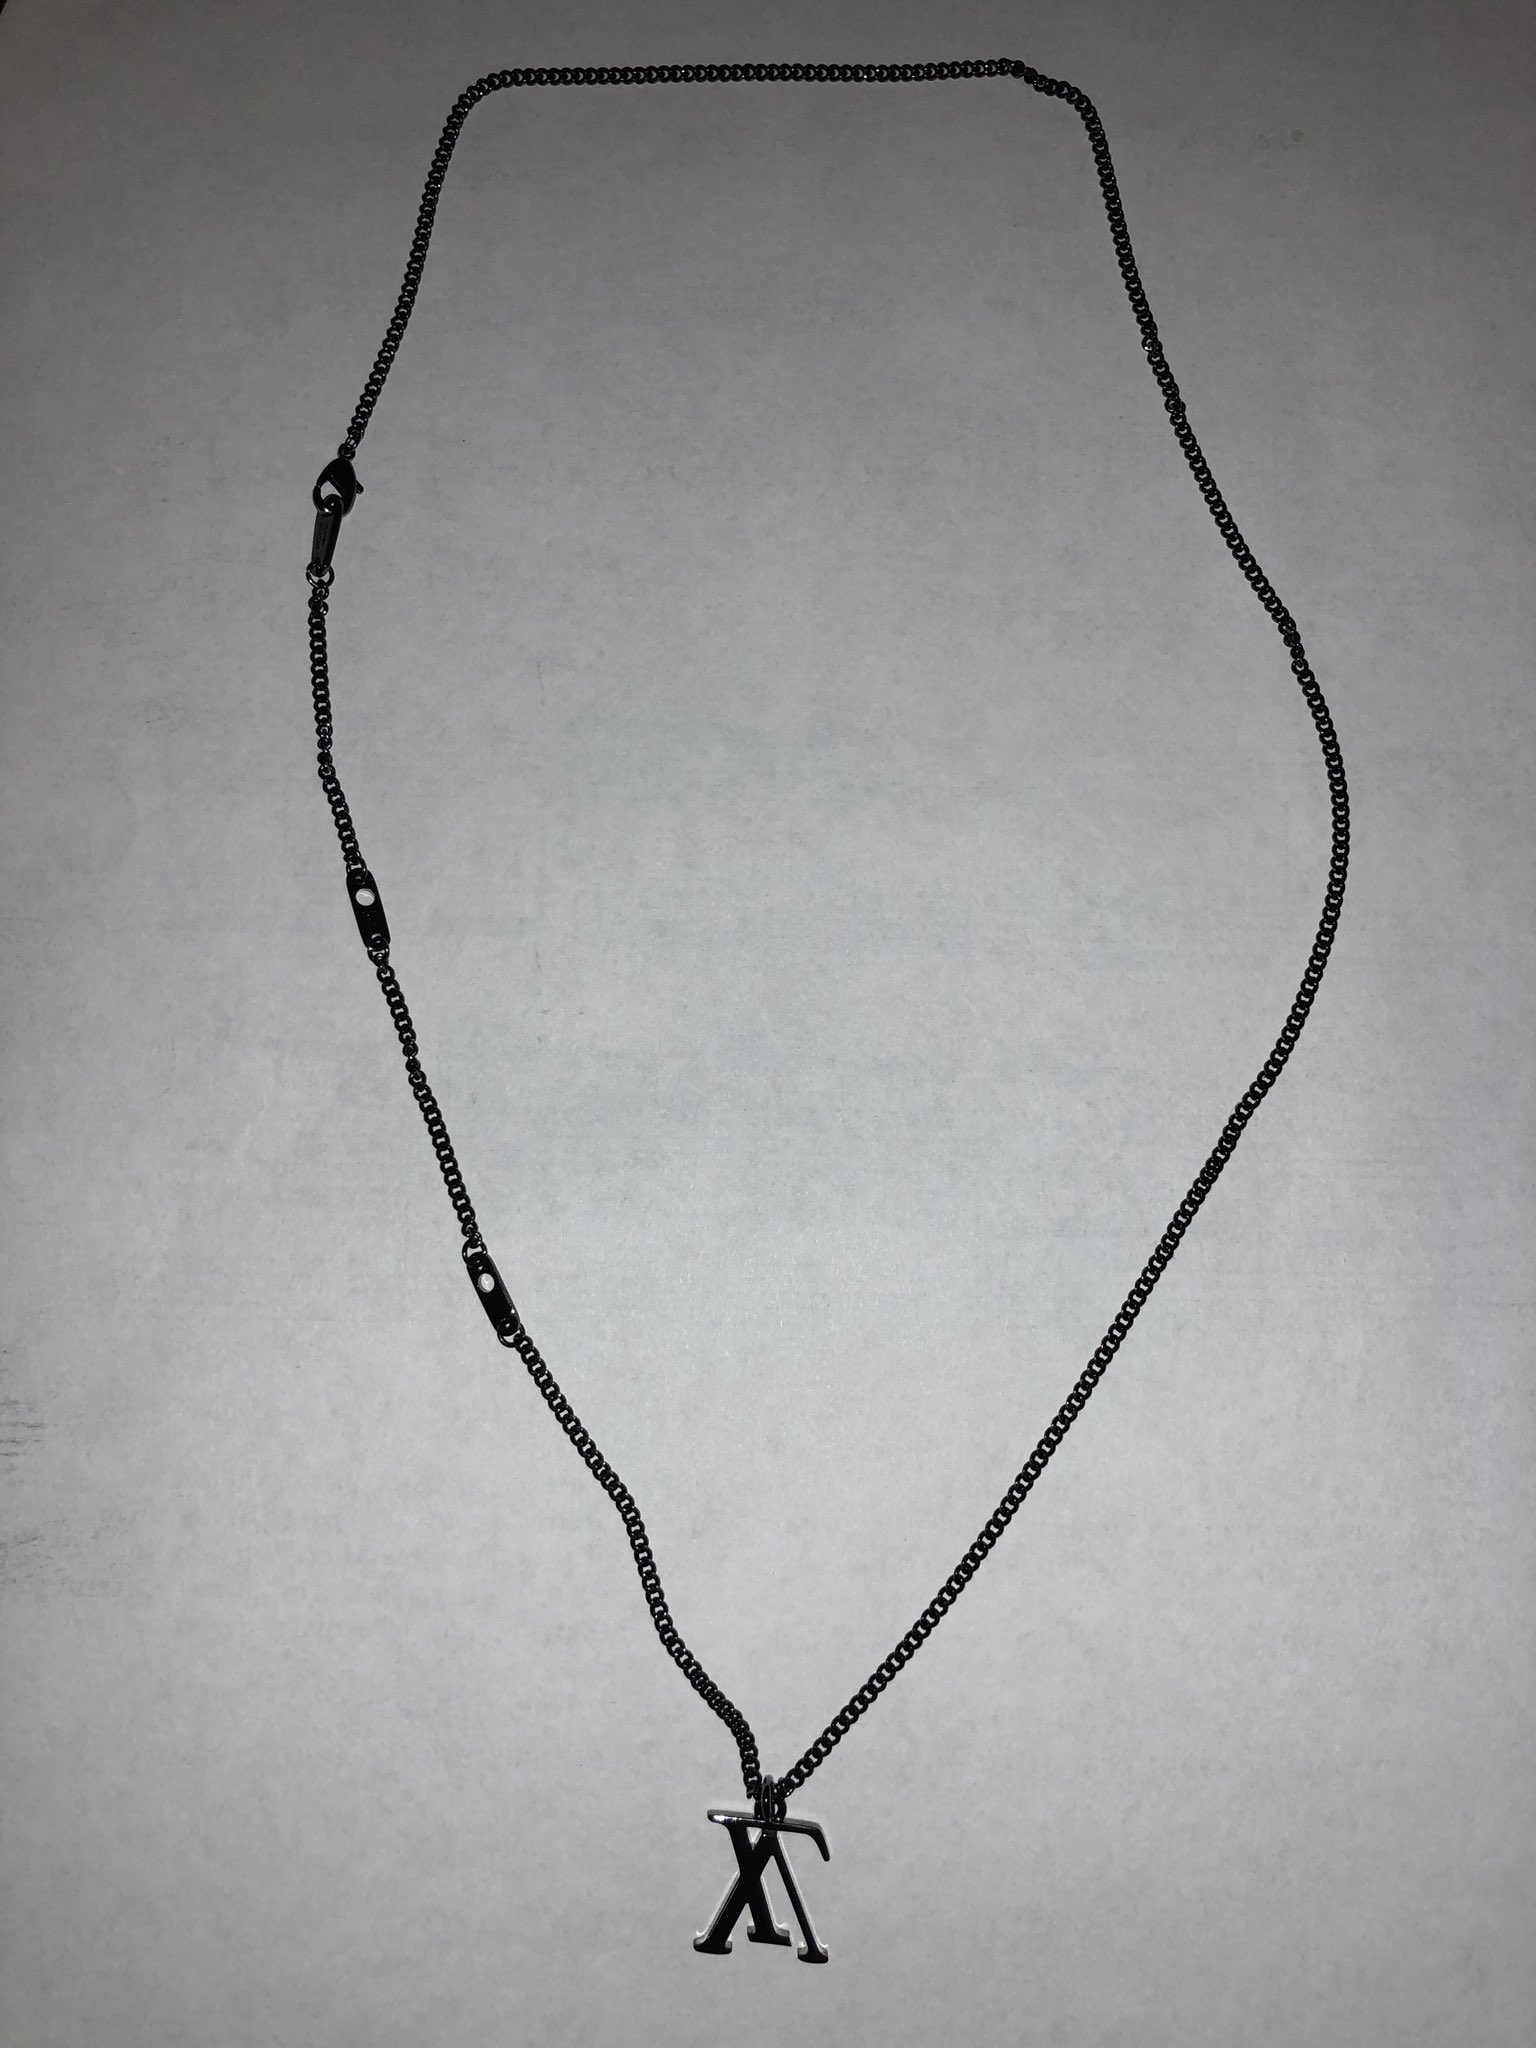 lv upside down necklace